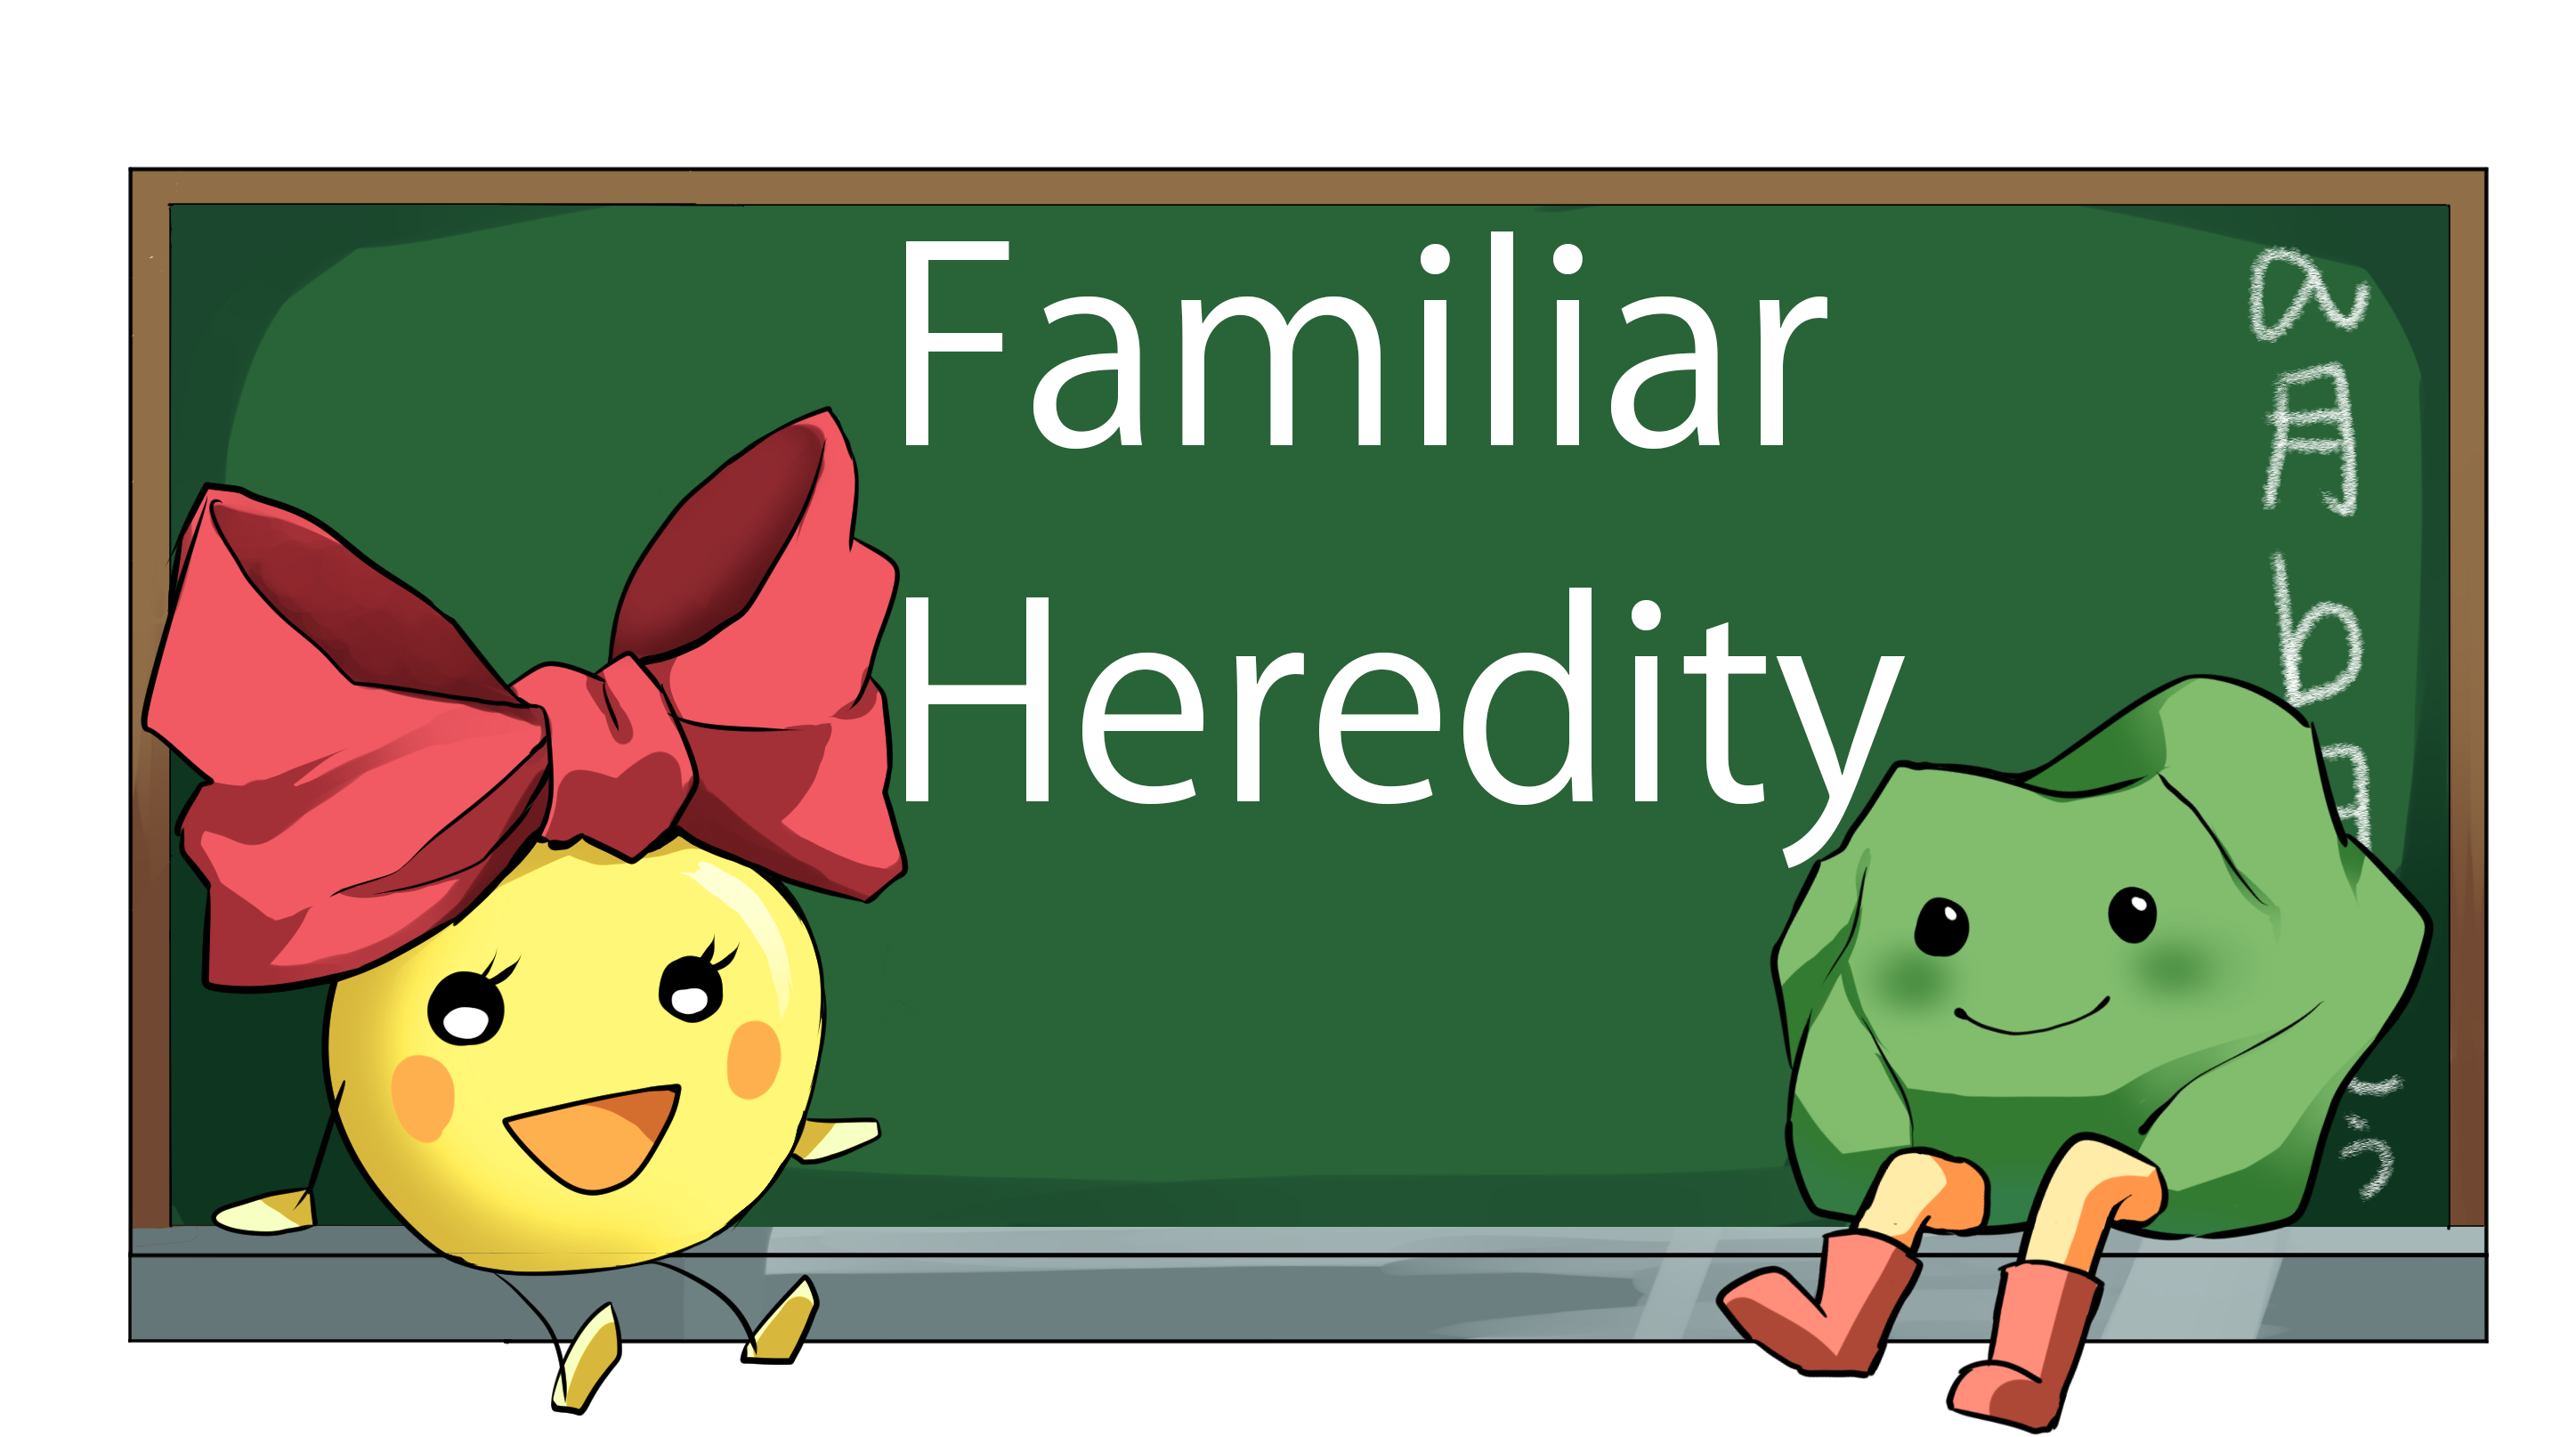 Familiar Heredity